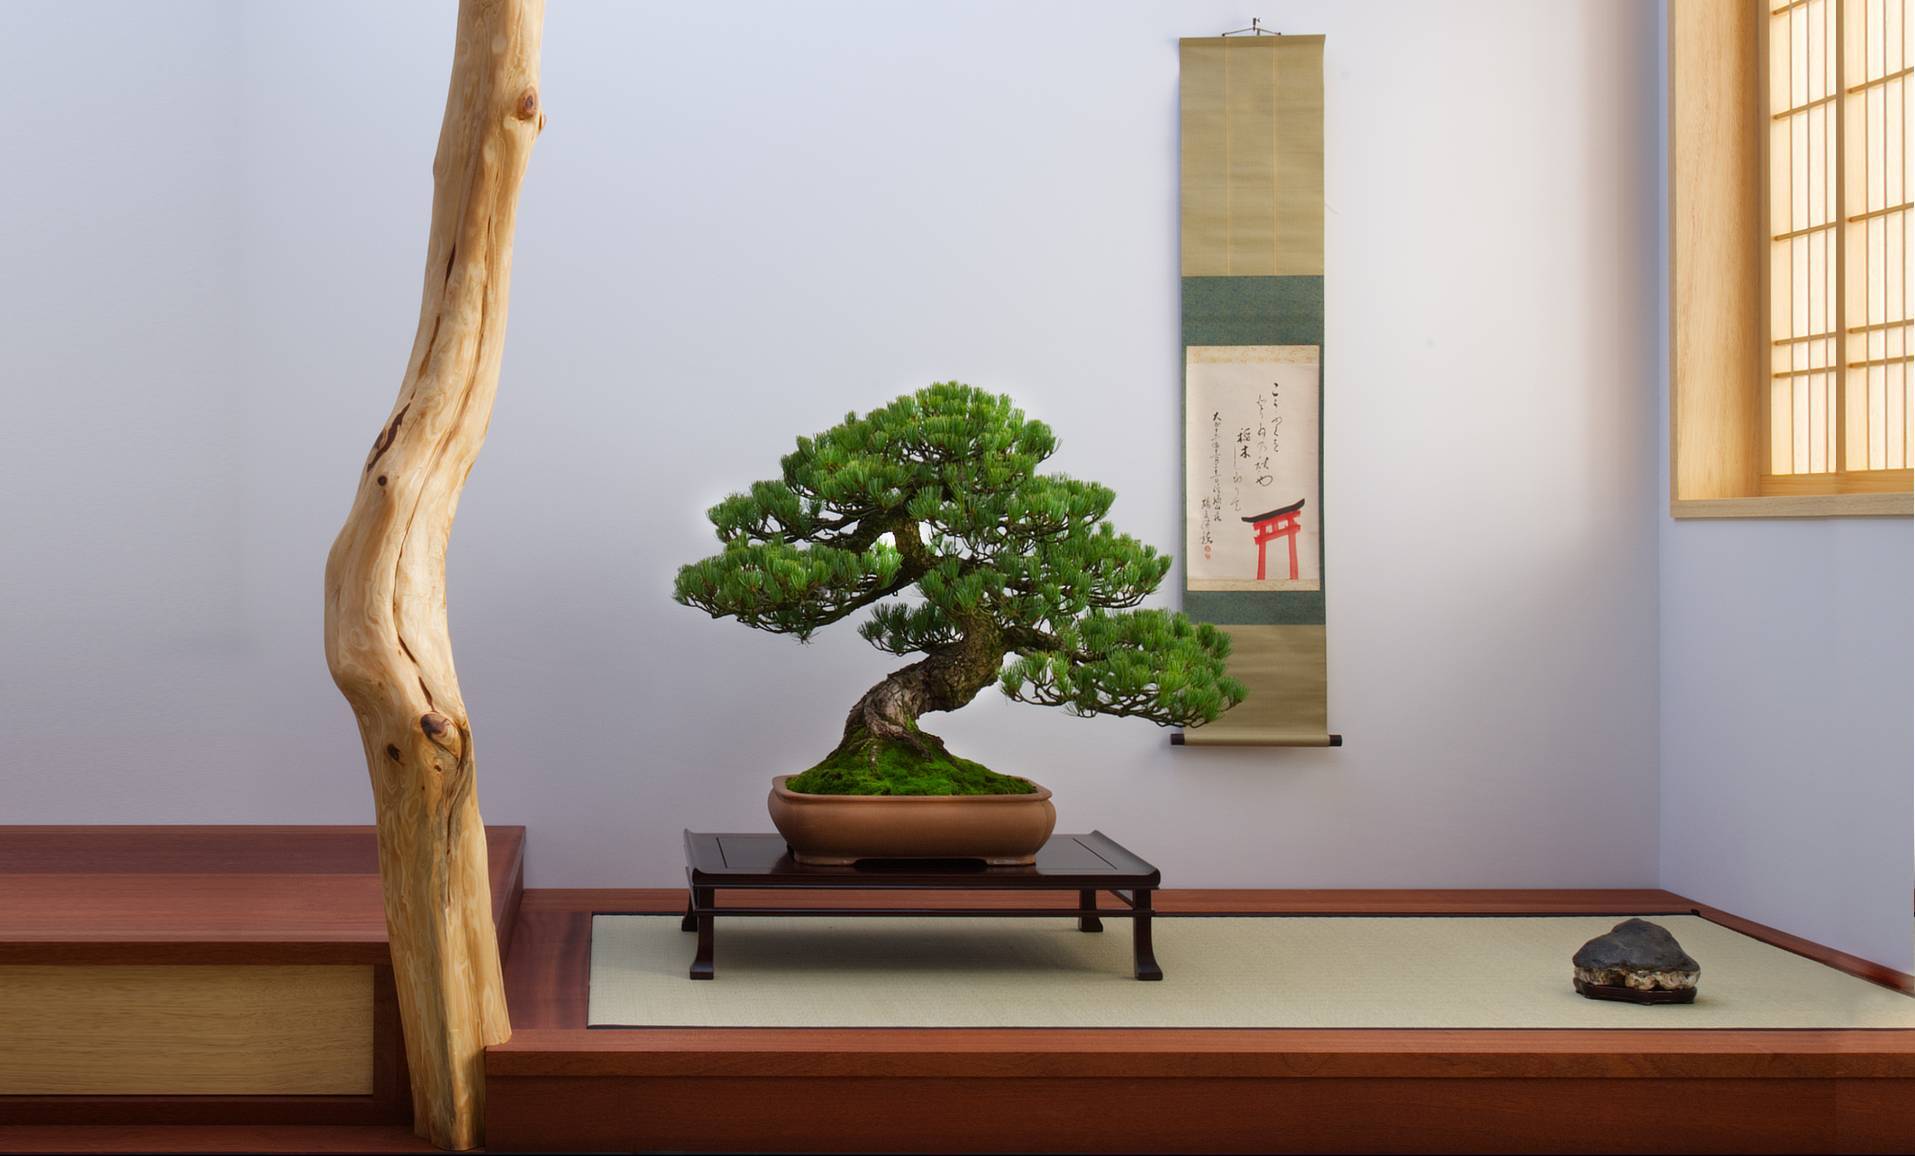 Scopri i bonsai appena arrivati dal Giappone ora!